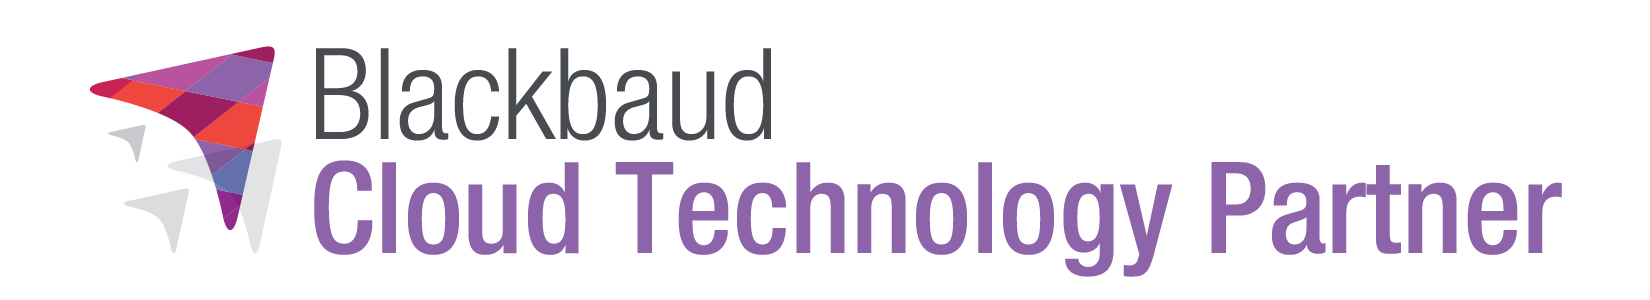 Blackbaud Cloud Technology Partner